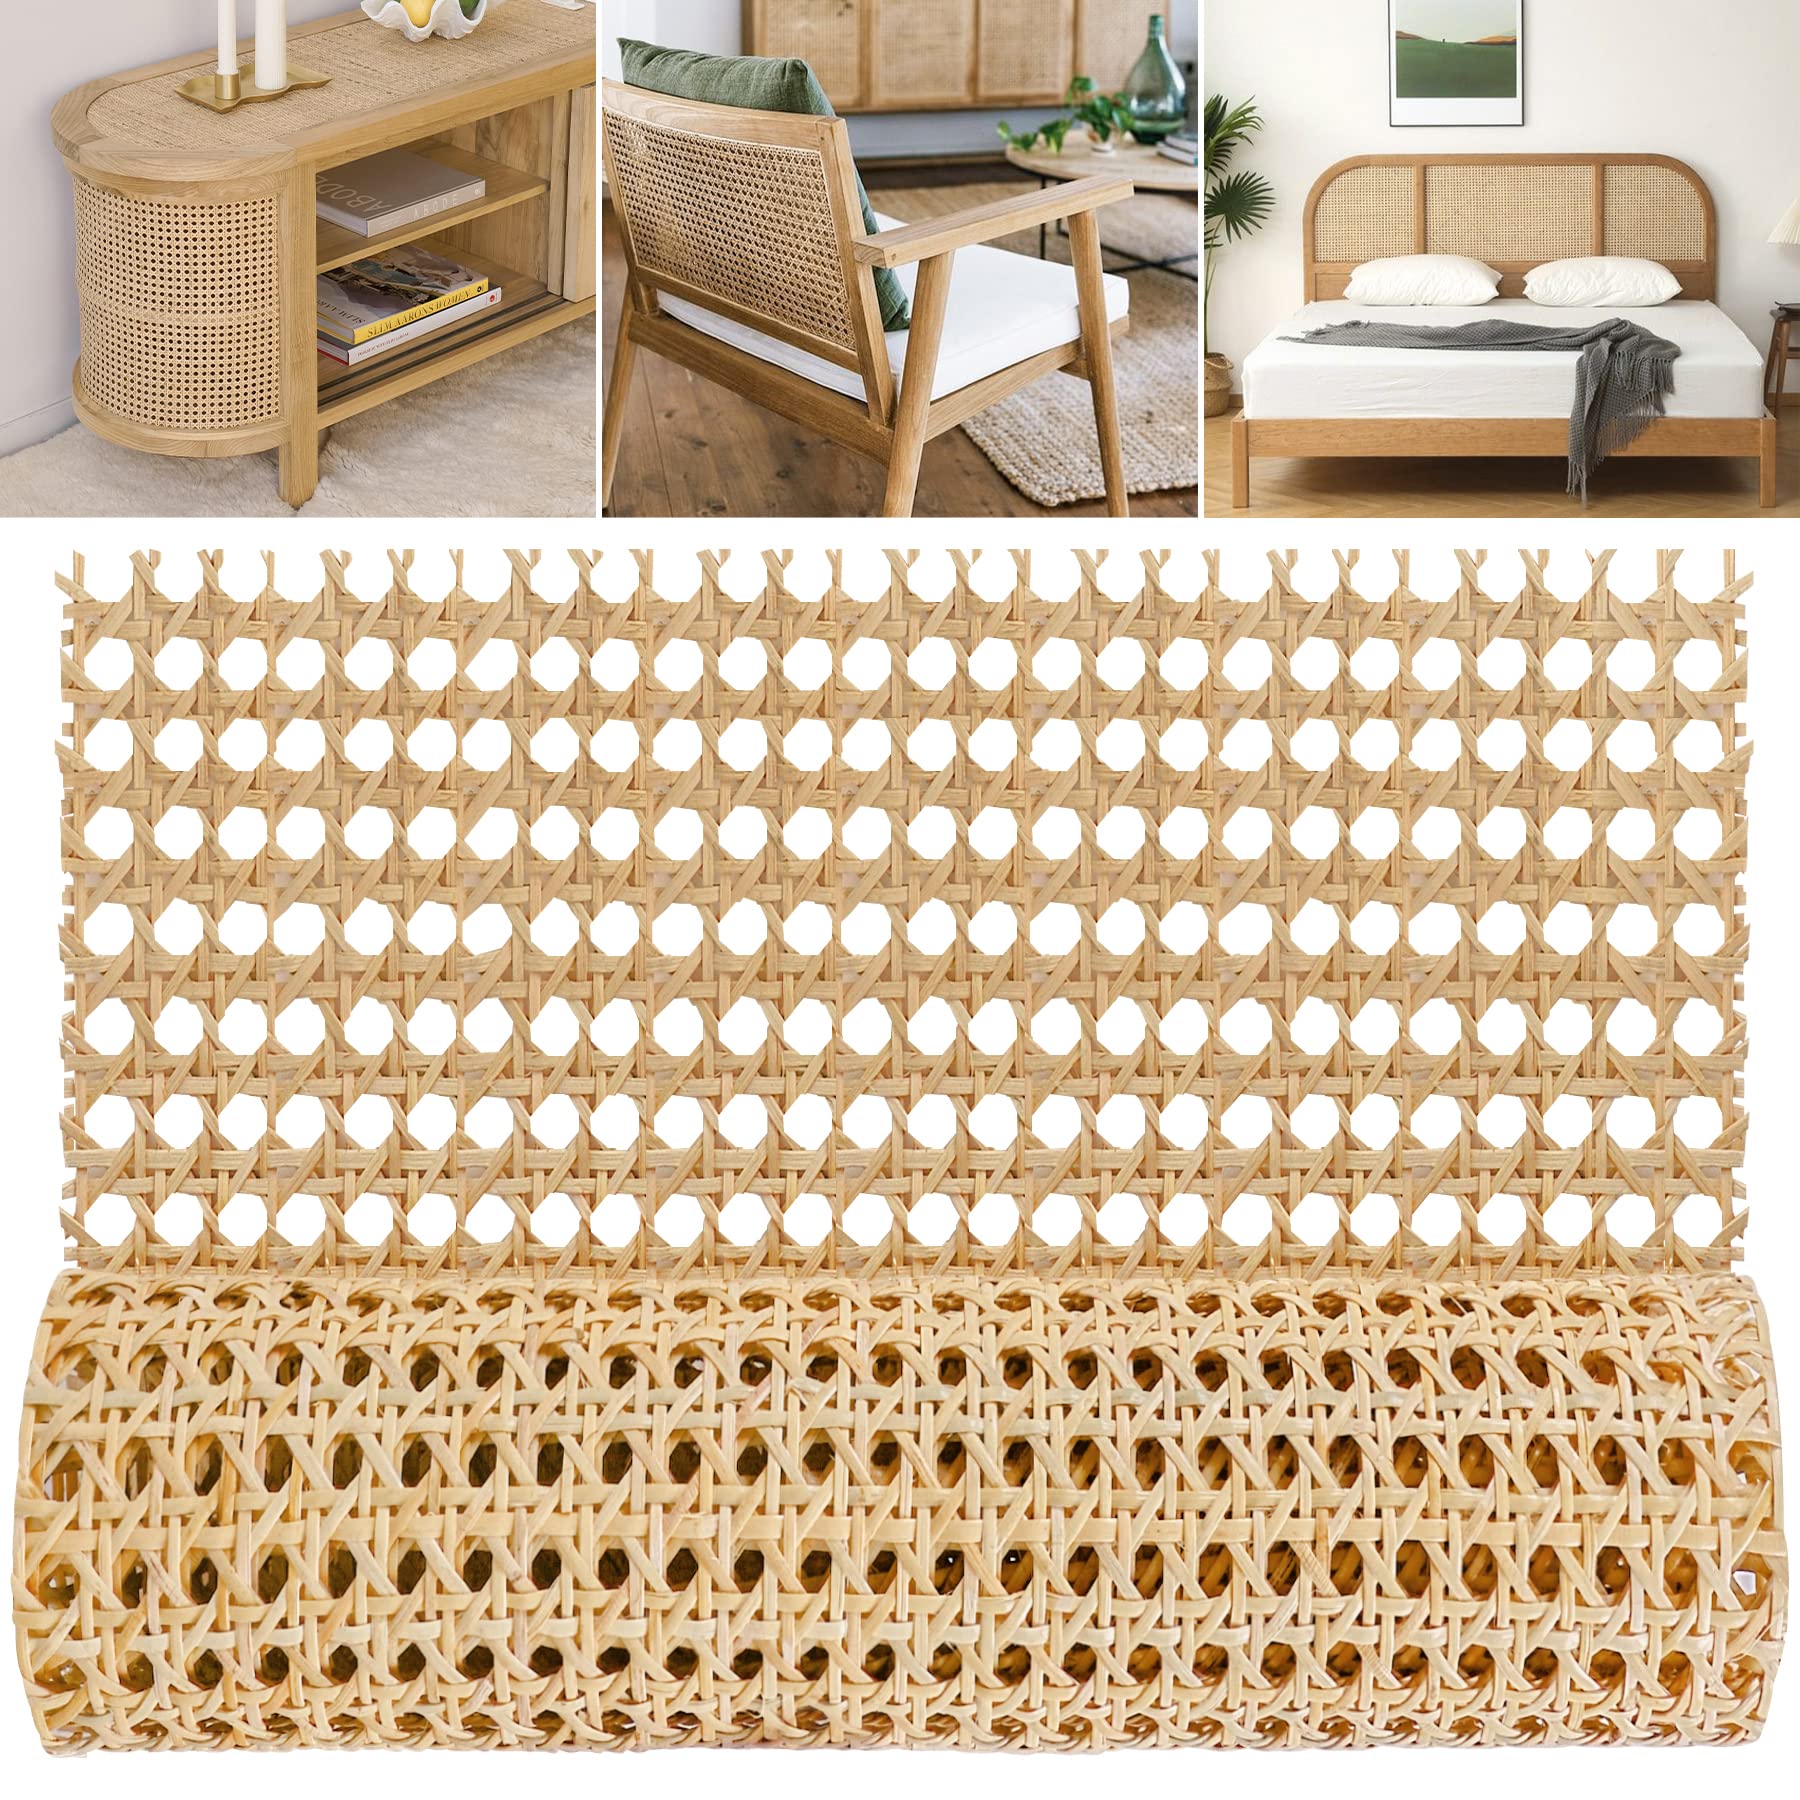 basket making supplies 3 Rolls of Natural Bamboo Rattan Skin Home